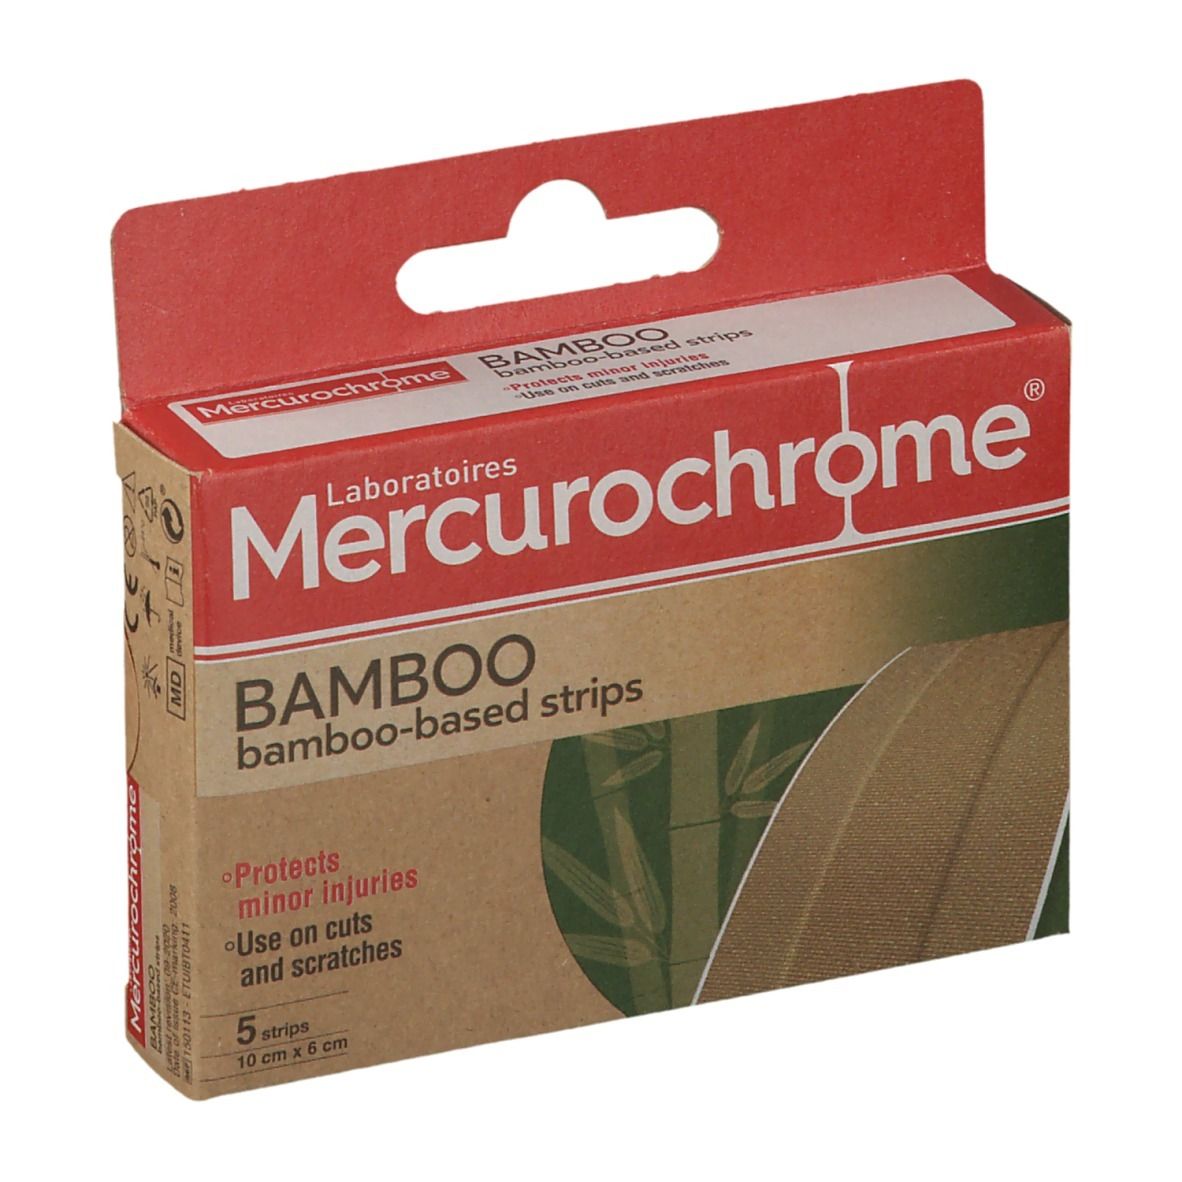 Mercurochrome® Bamboo Based Strips 10 cm x 6 cm